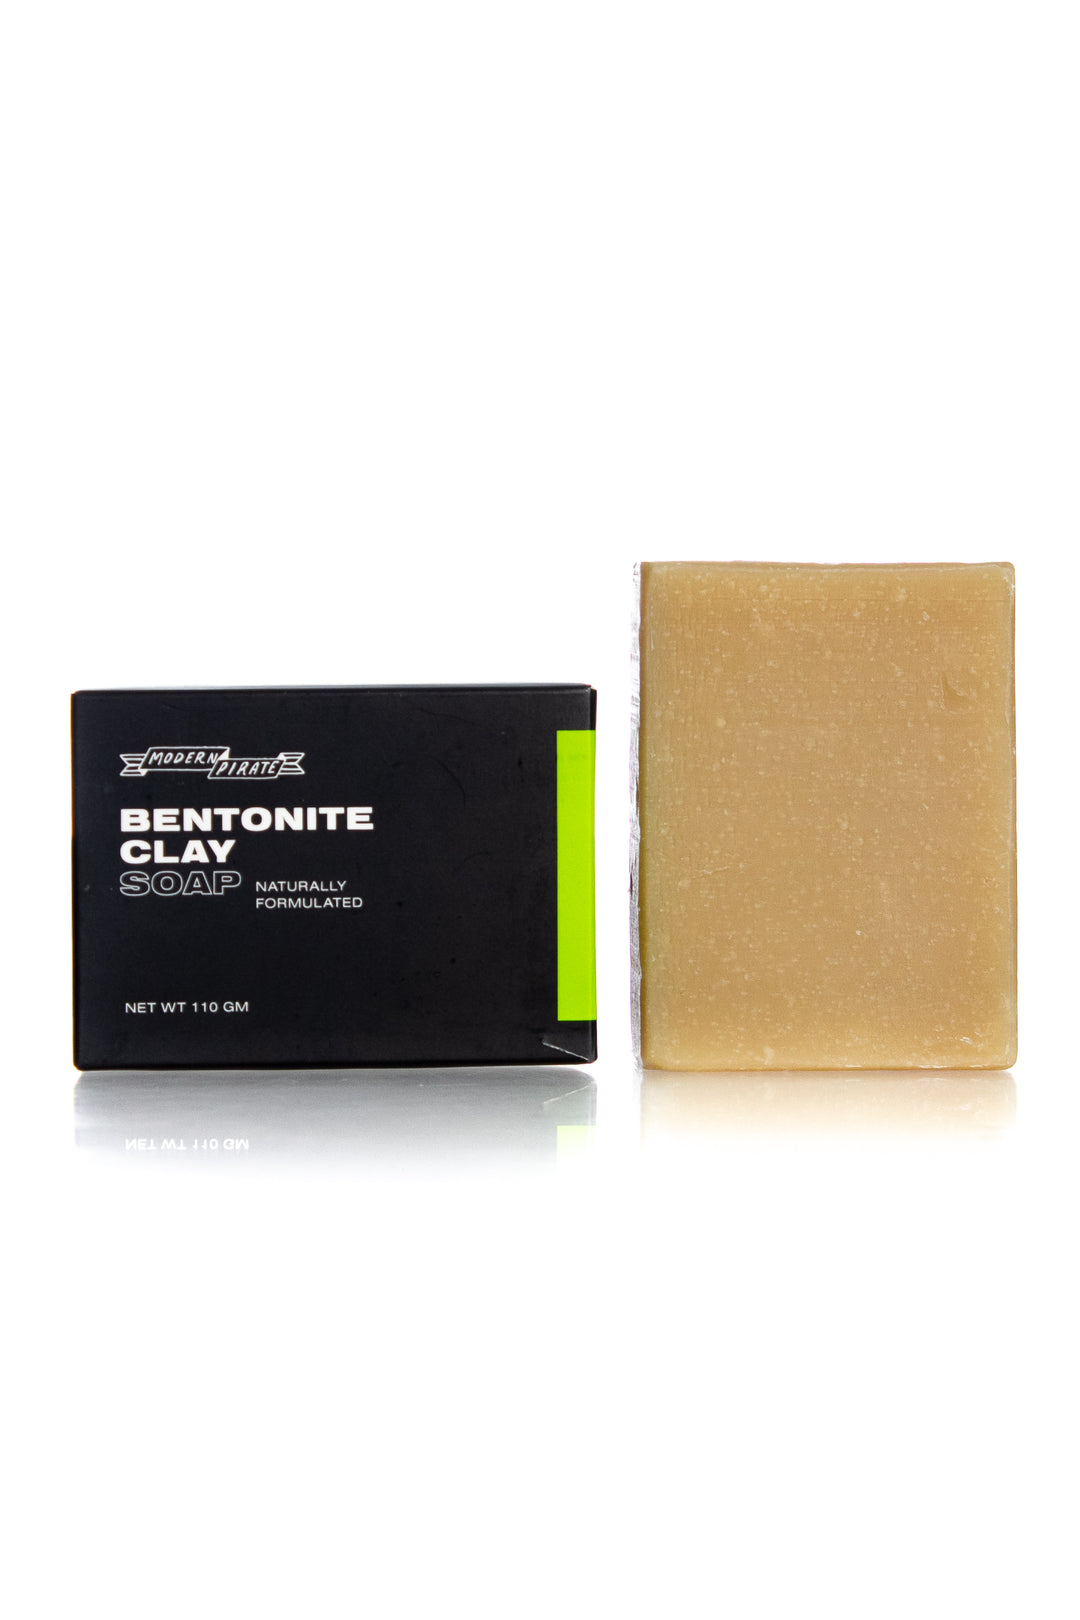 MODERN PIRATE Bentonite Clay Soap | 110ml